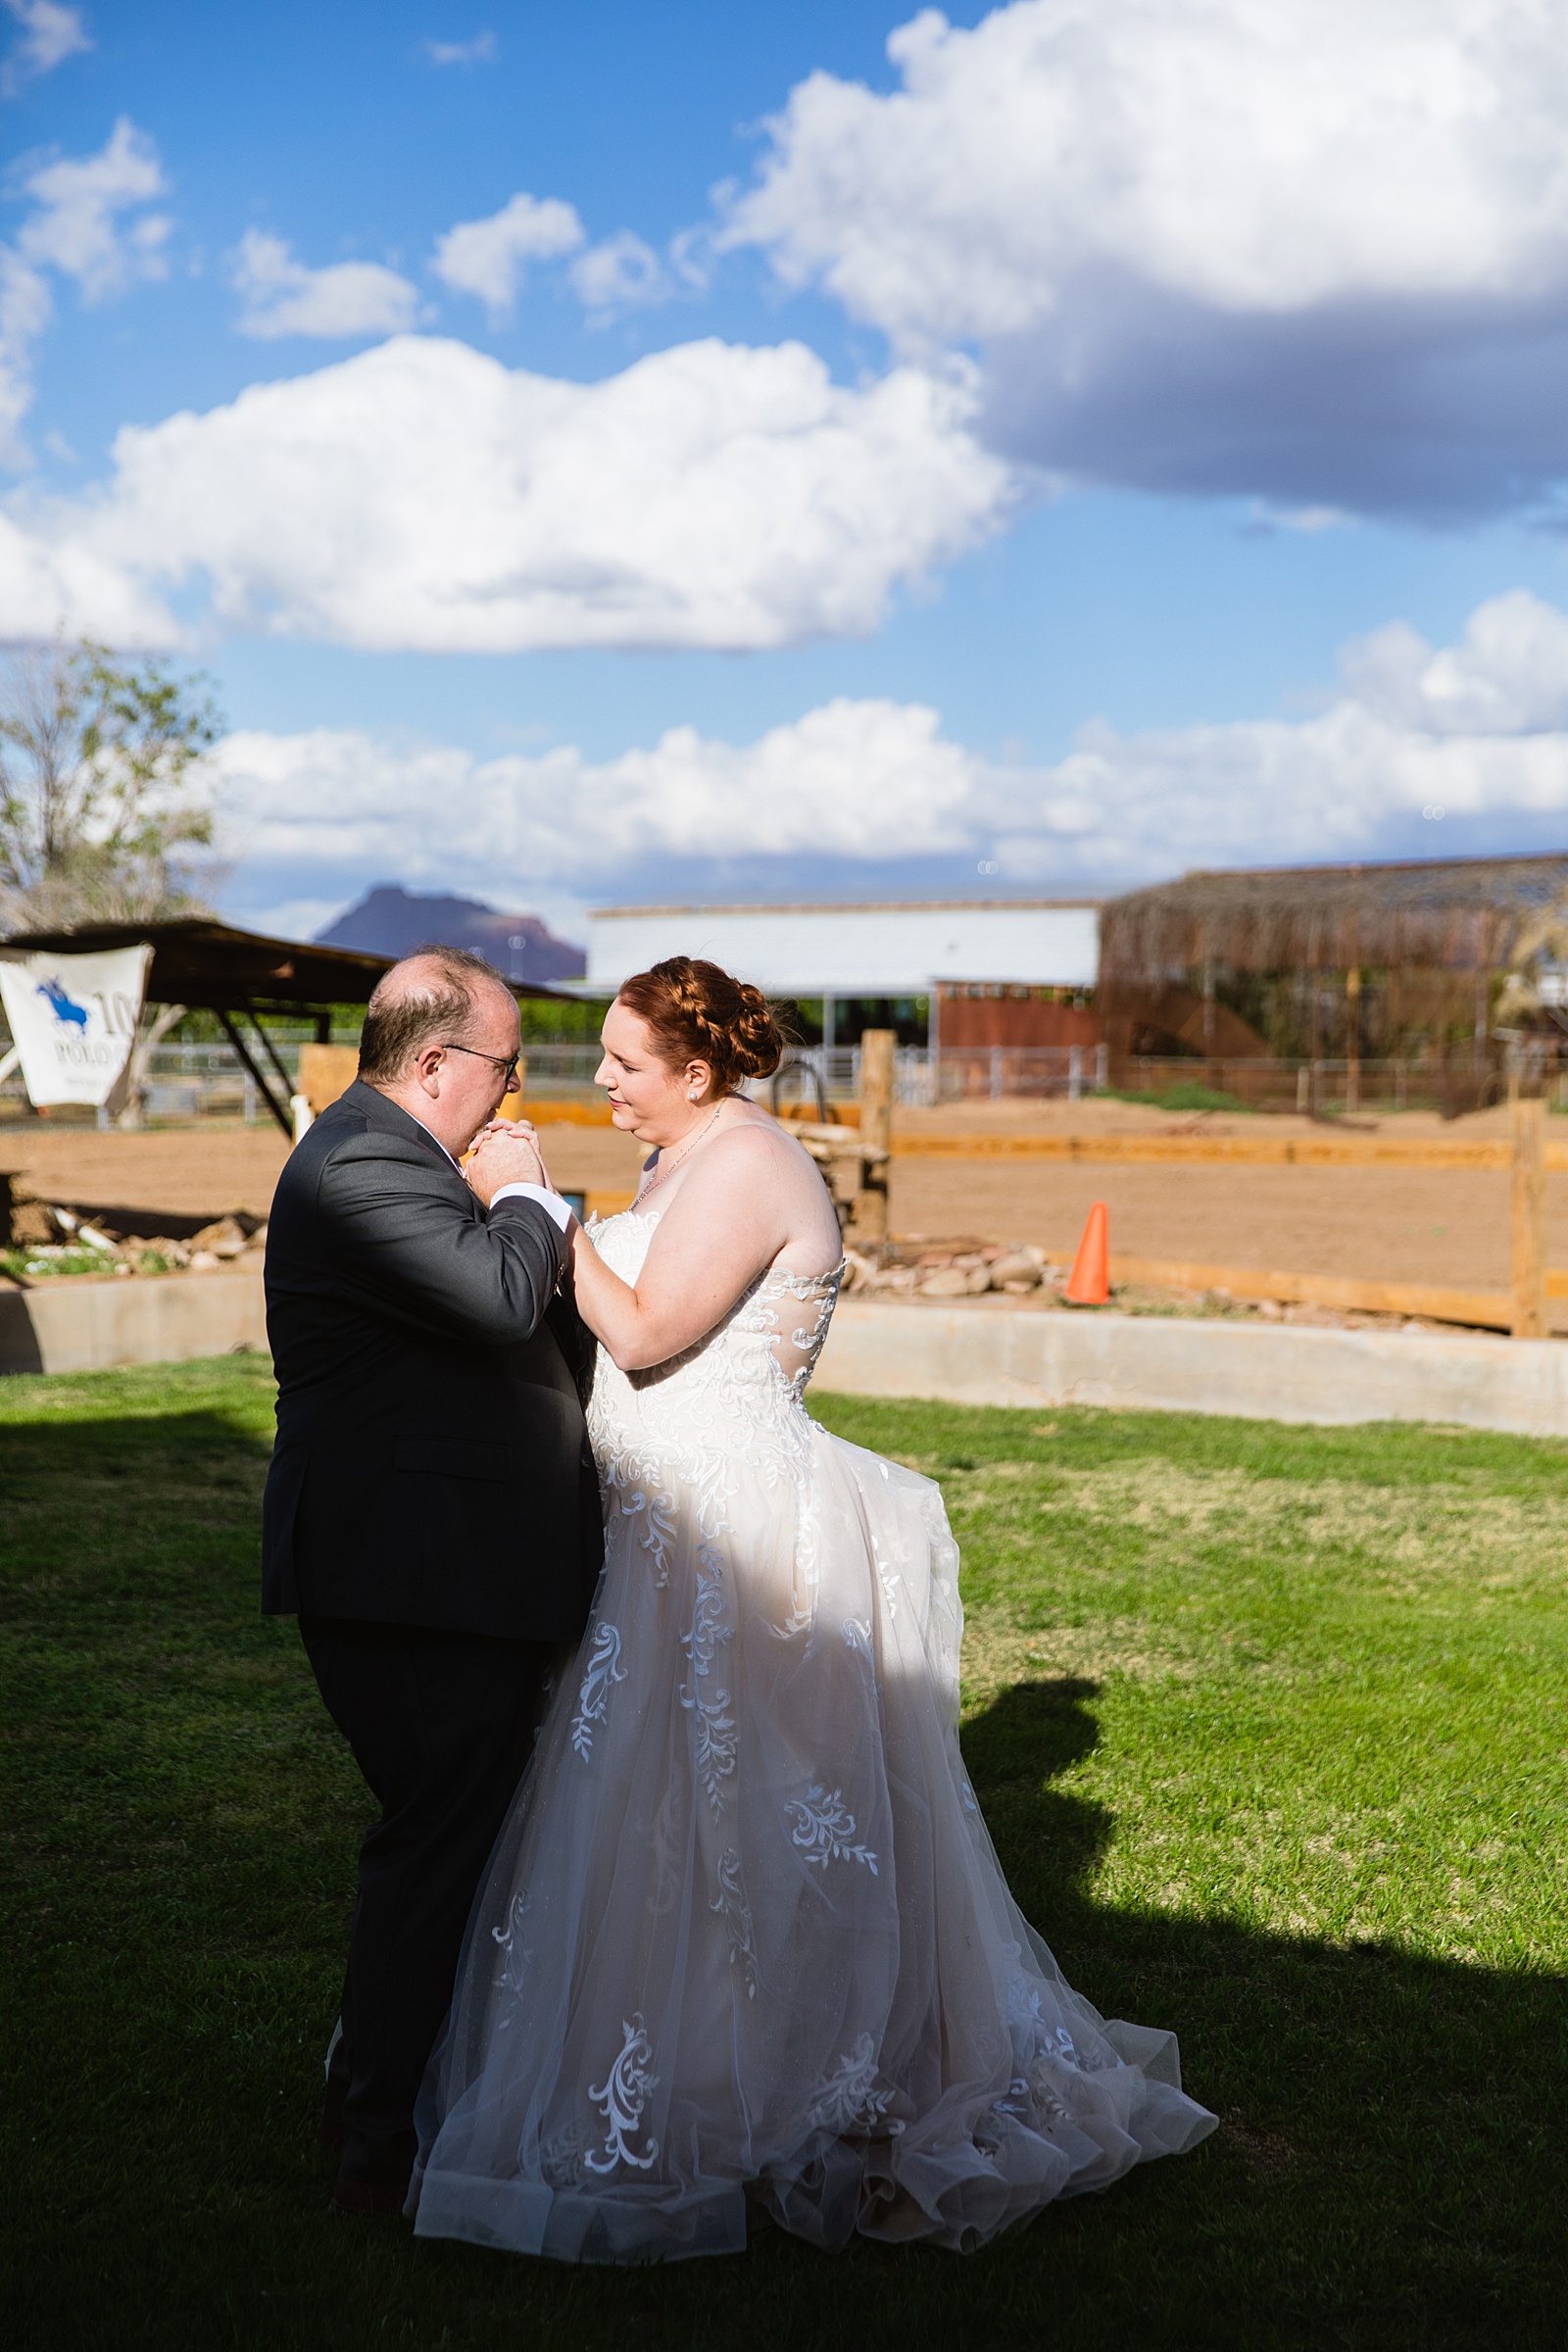 Newlyweds sharing first dance at their 101 Polo Club wedding reception by Arizona wedding photographer PMA Photography.